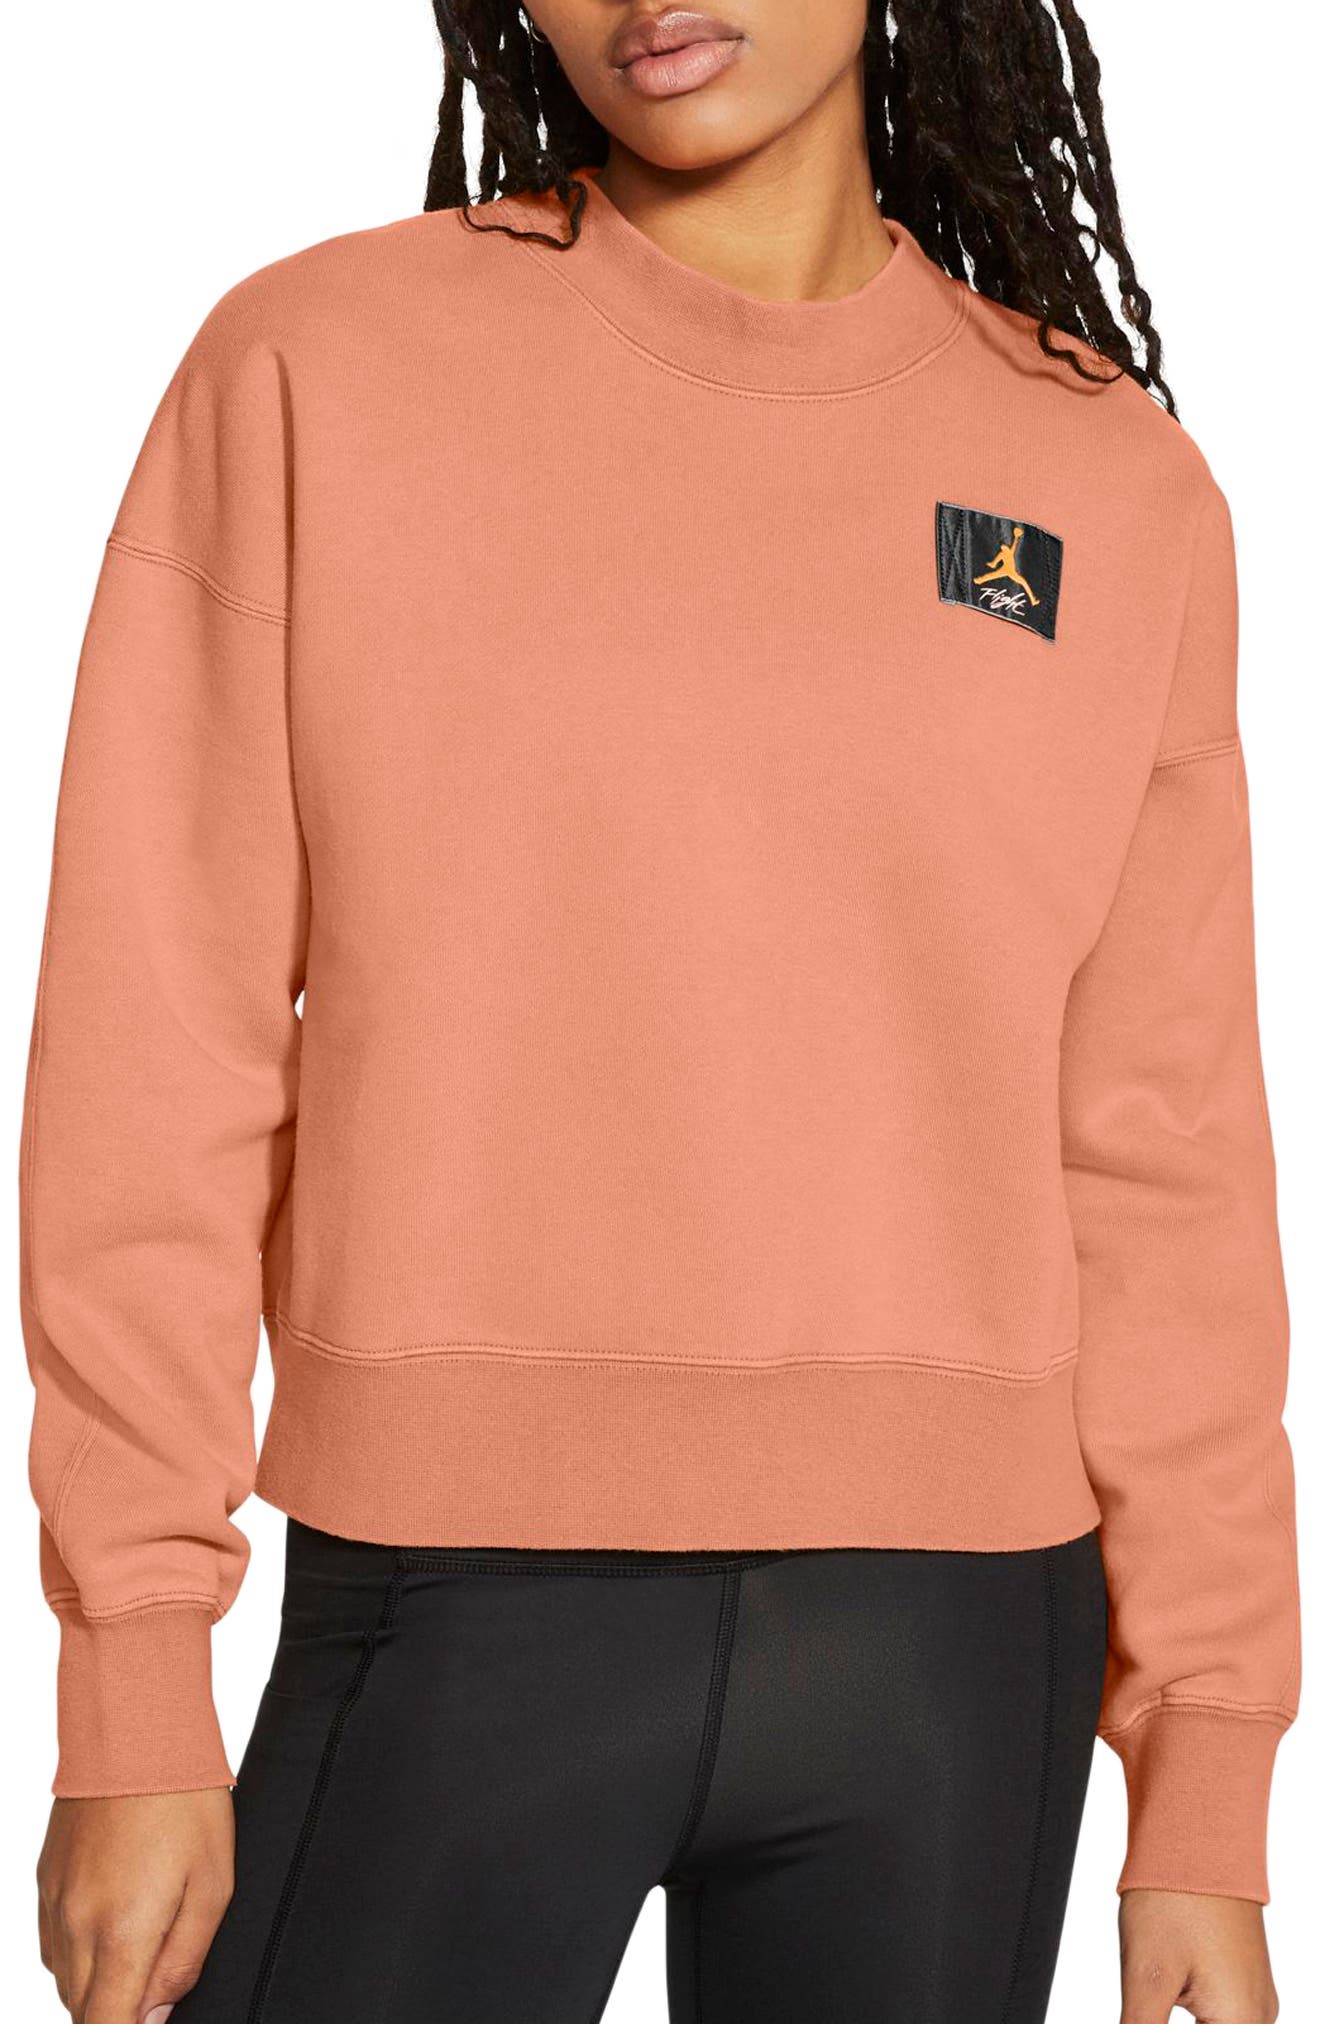 Women's Orange Nike Clothing | Nordstrom